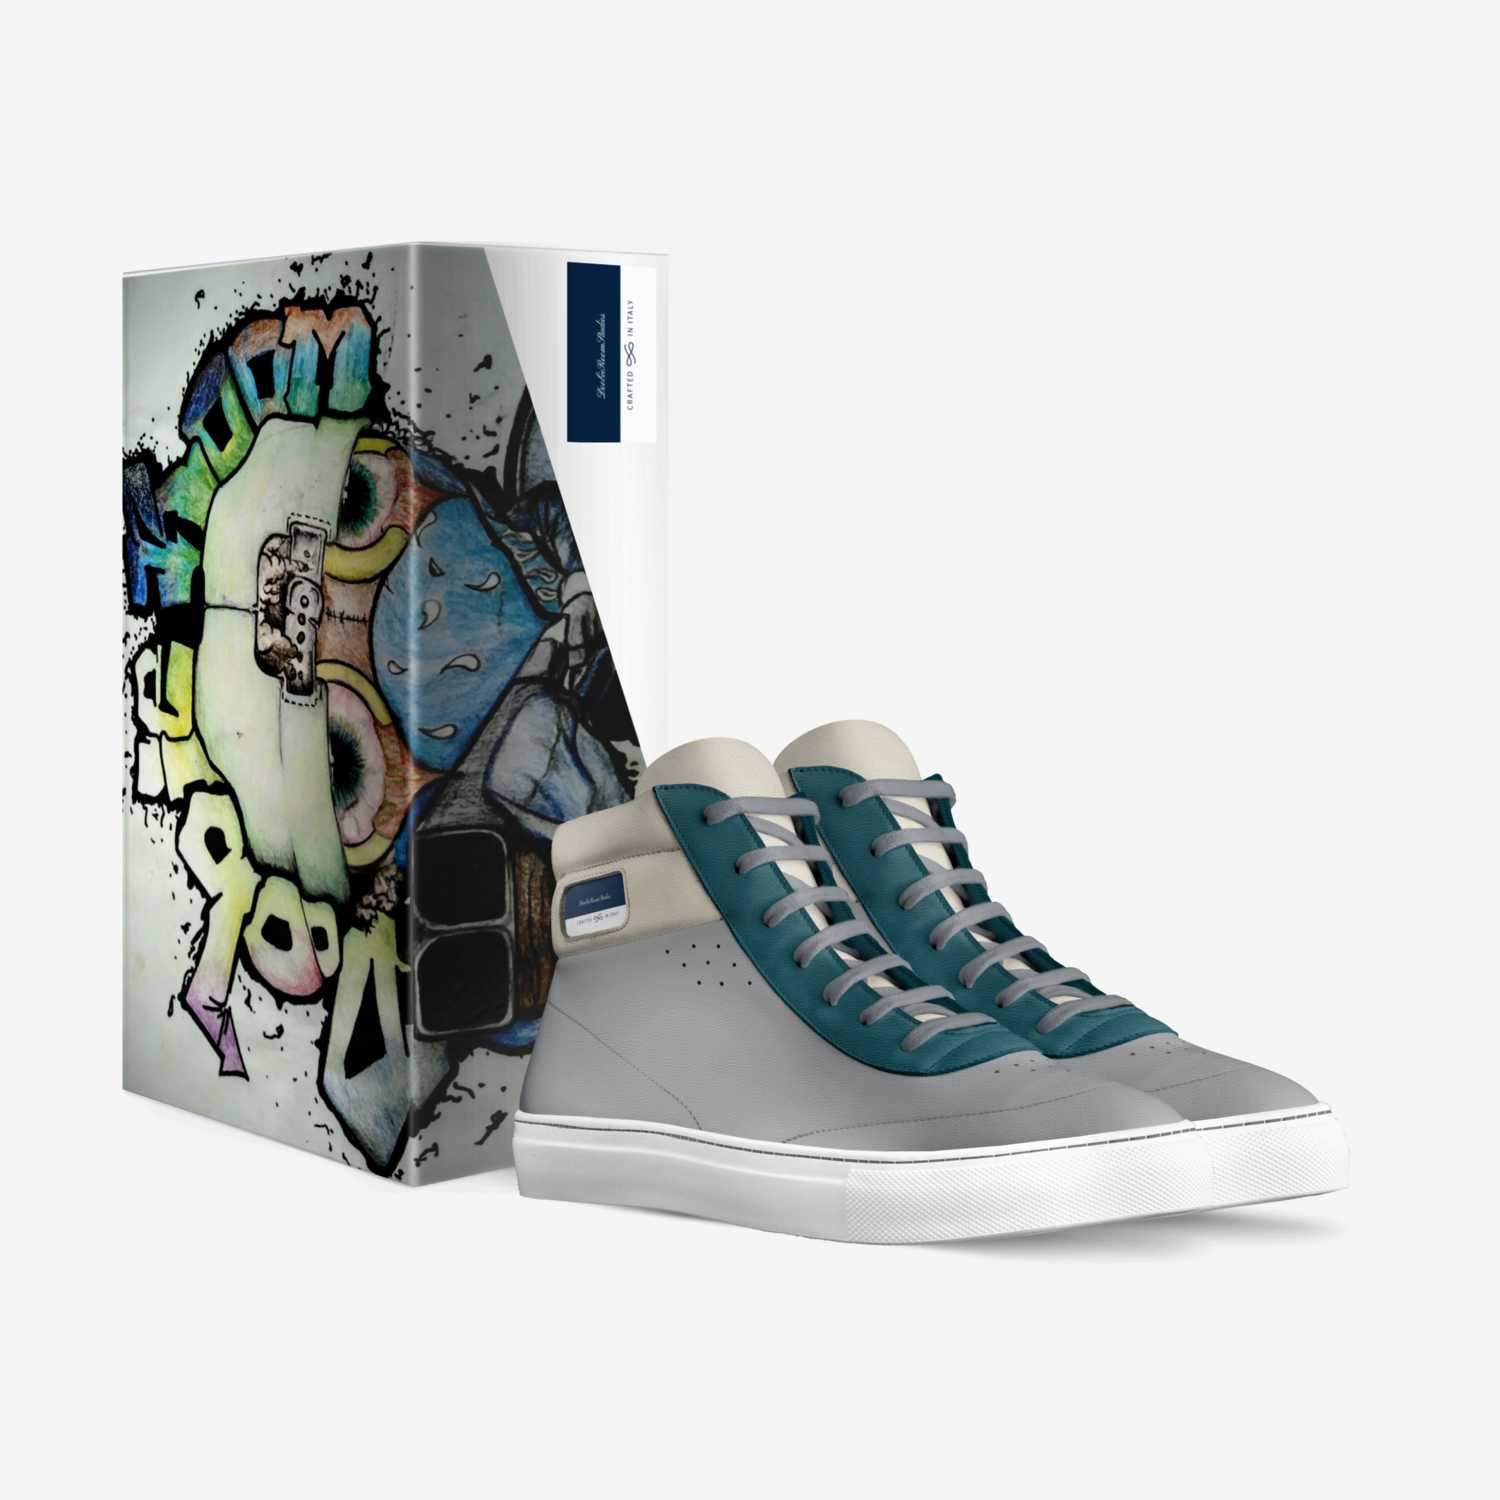 DoobieRoomStudios  custom made in Italy shoes by Doobie Room Studios | Box view